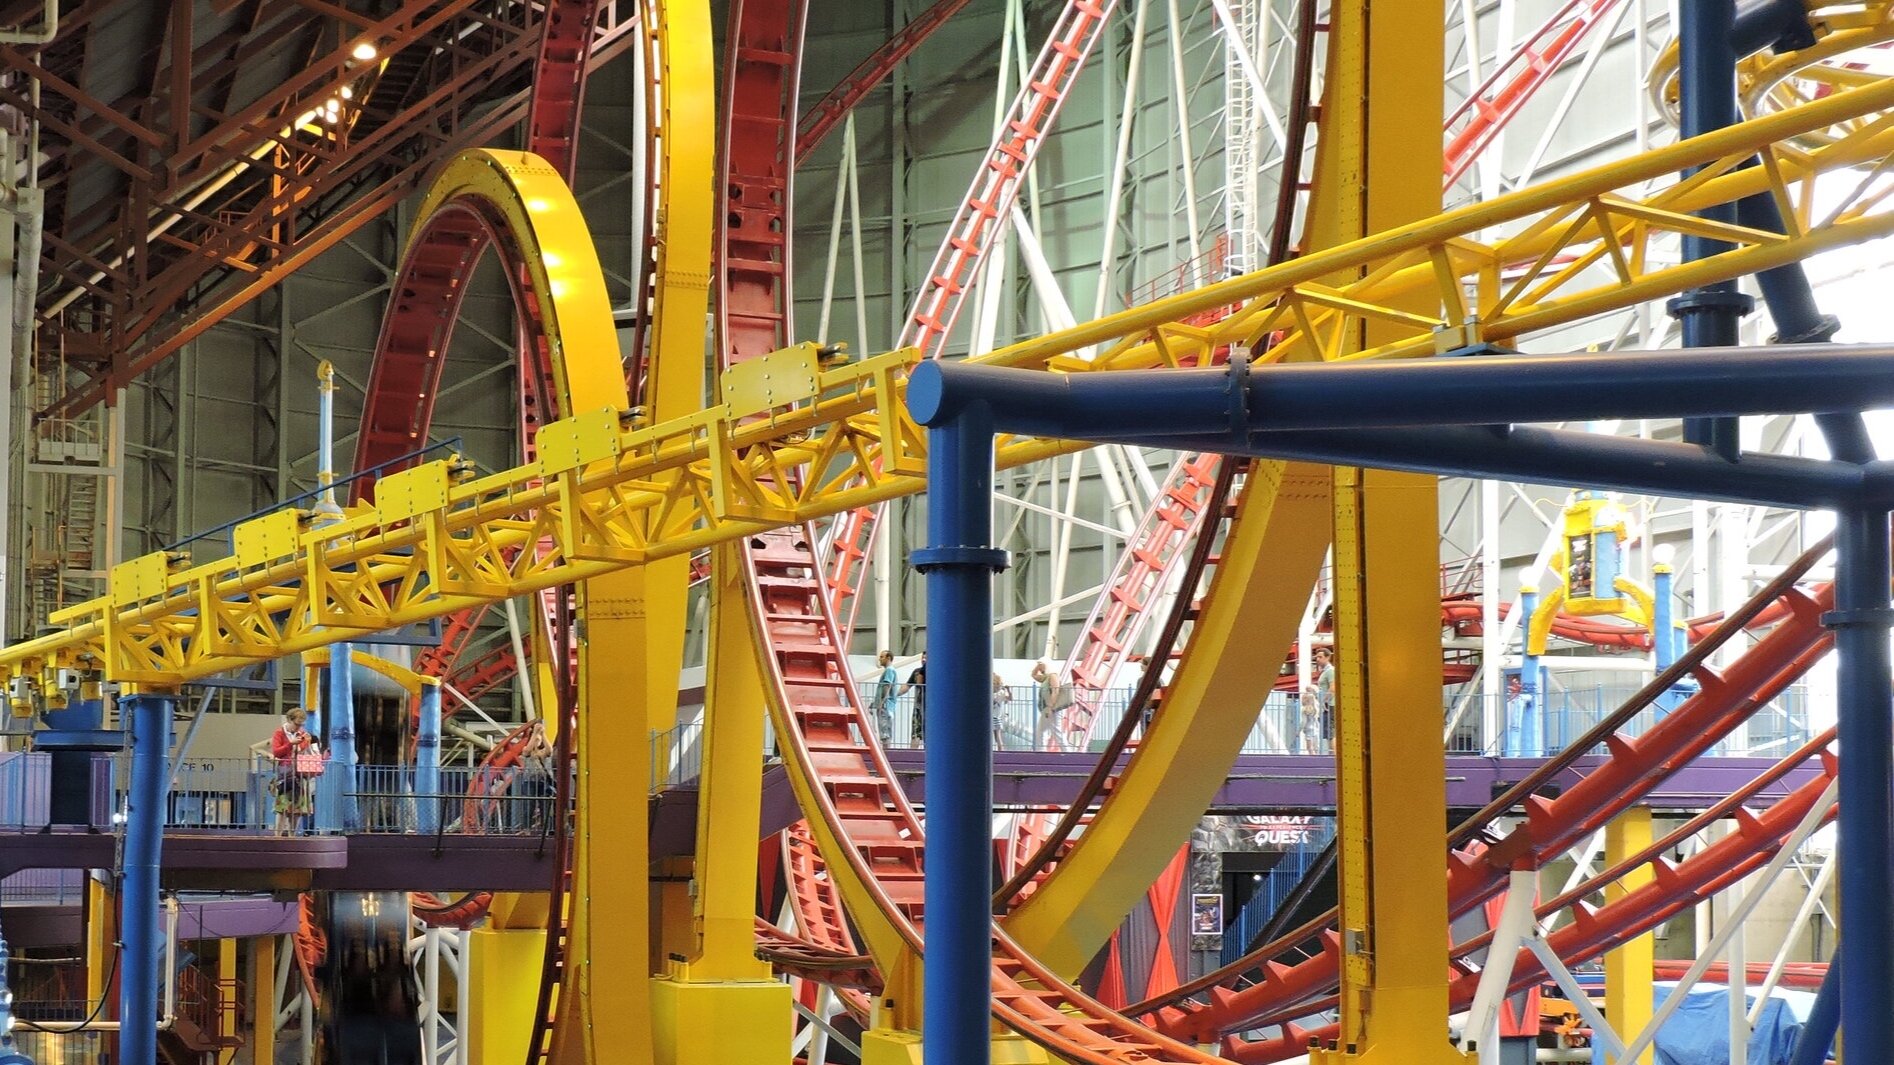 West Edmonton Mall's indoor roller-coaster the Mindbender